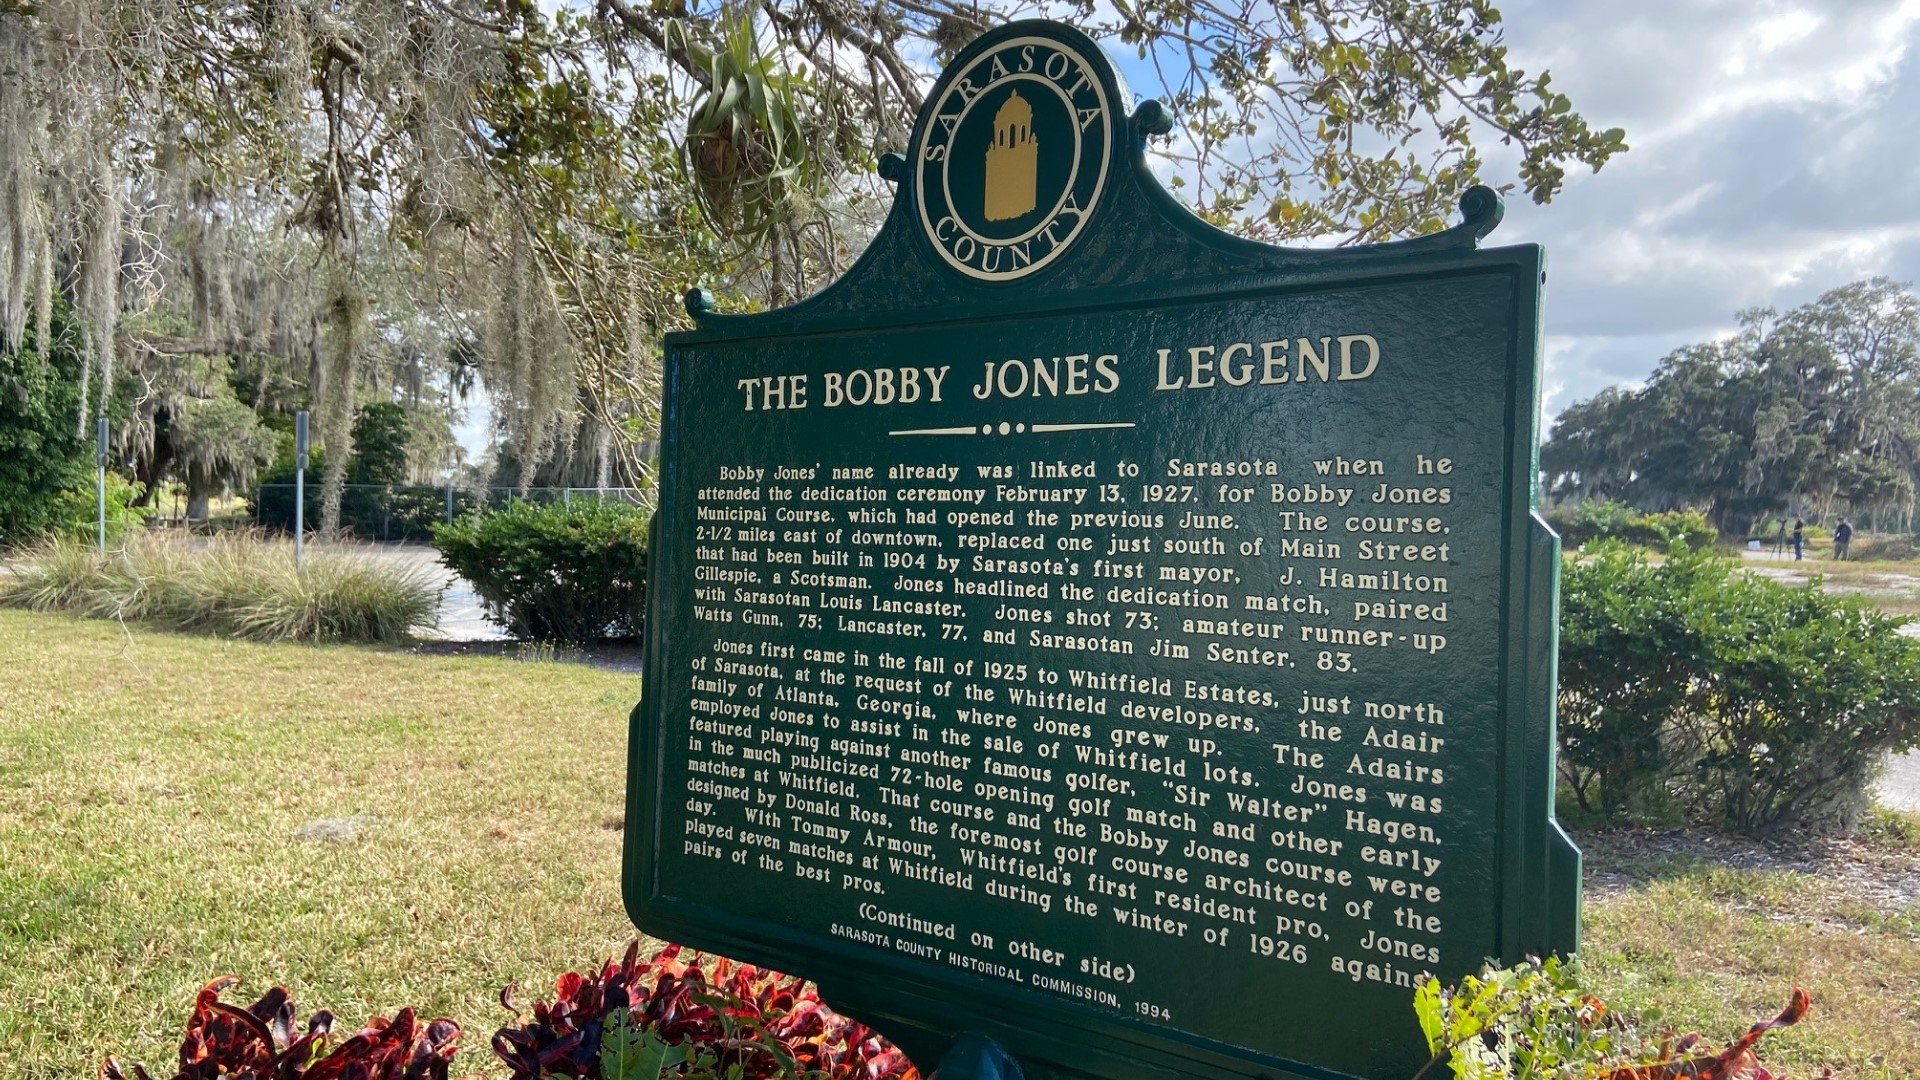 Bobby Jones golf course in Sarasota closed for renovation